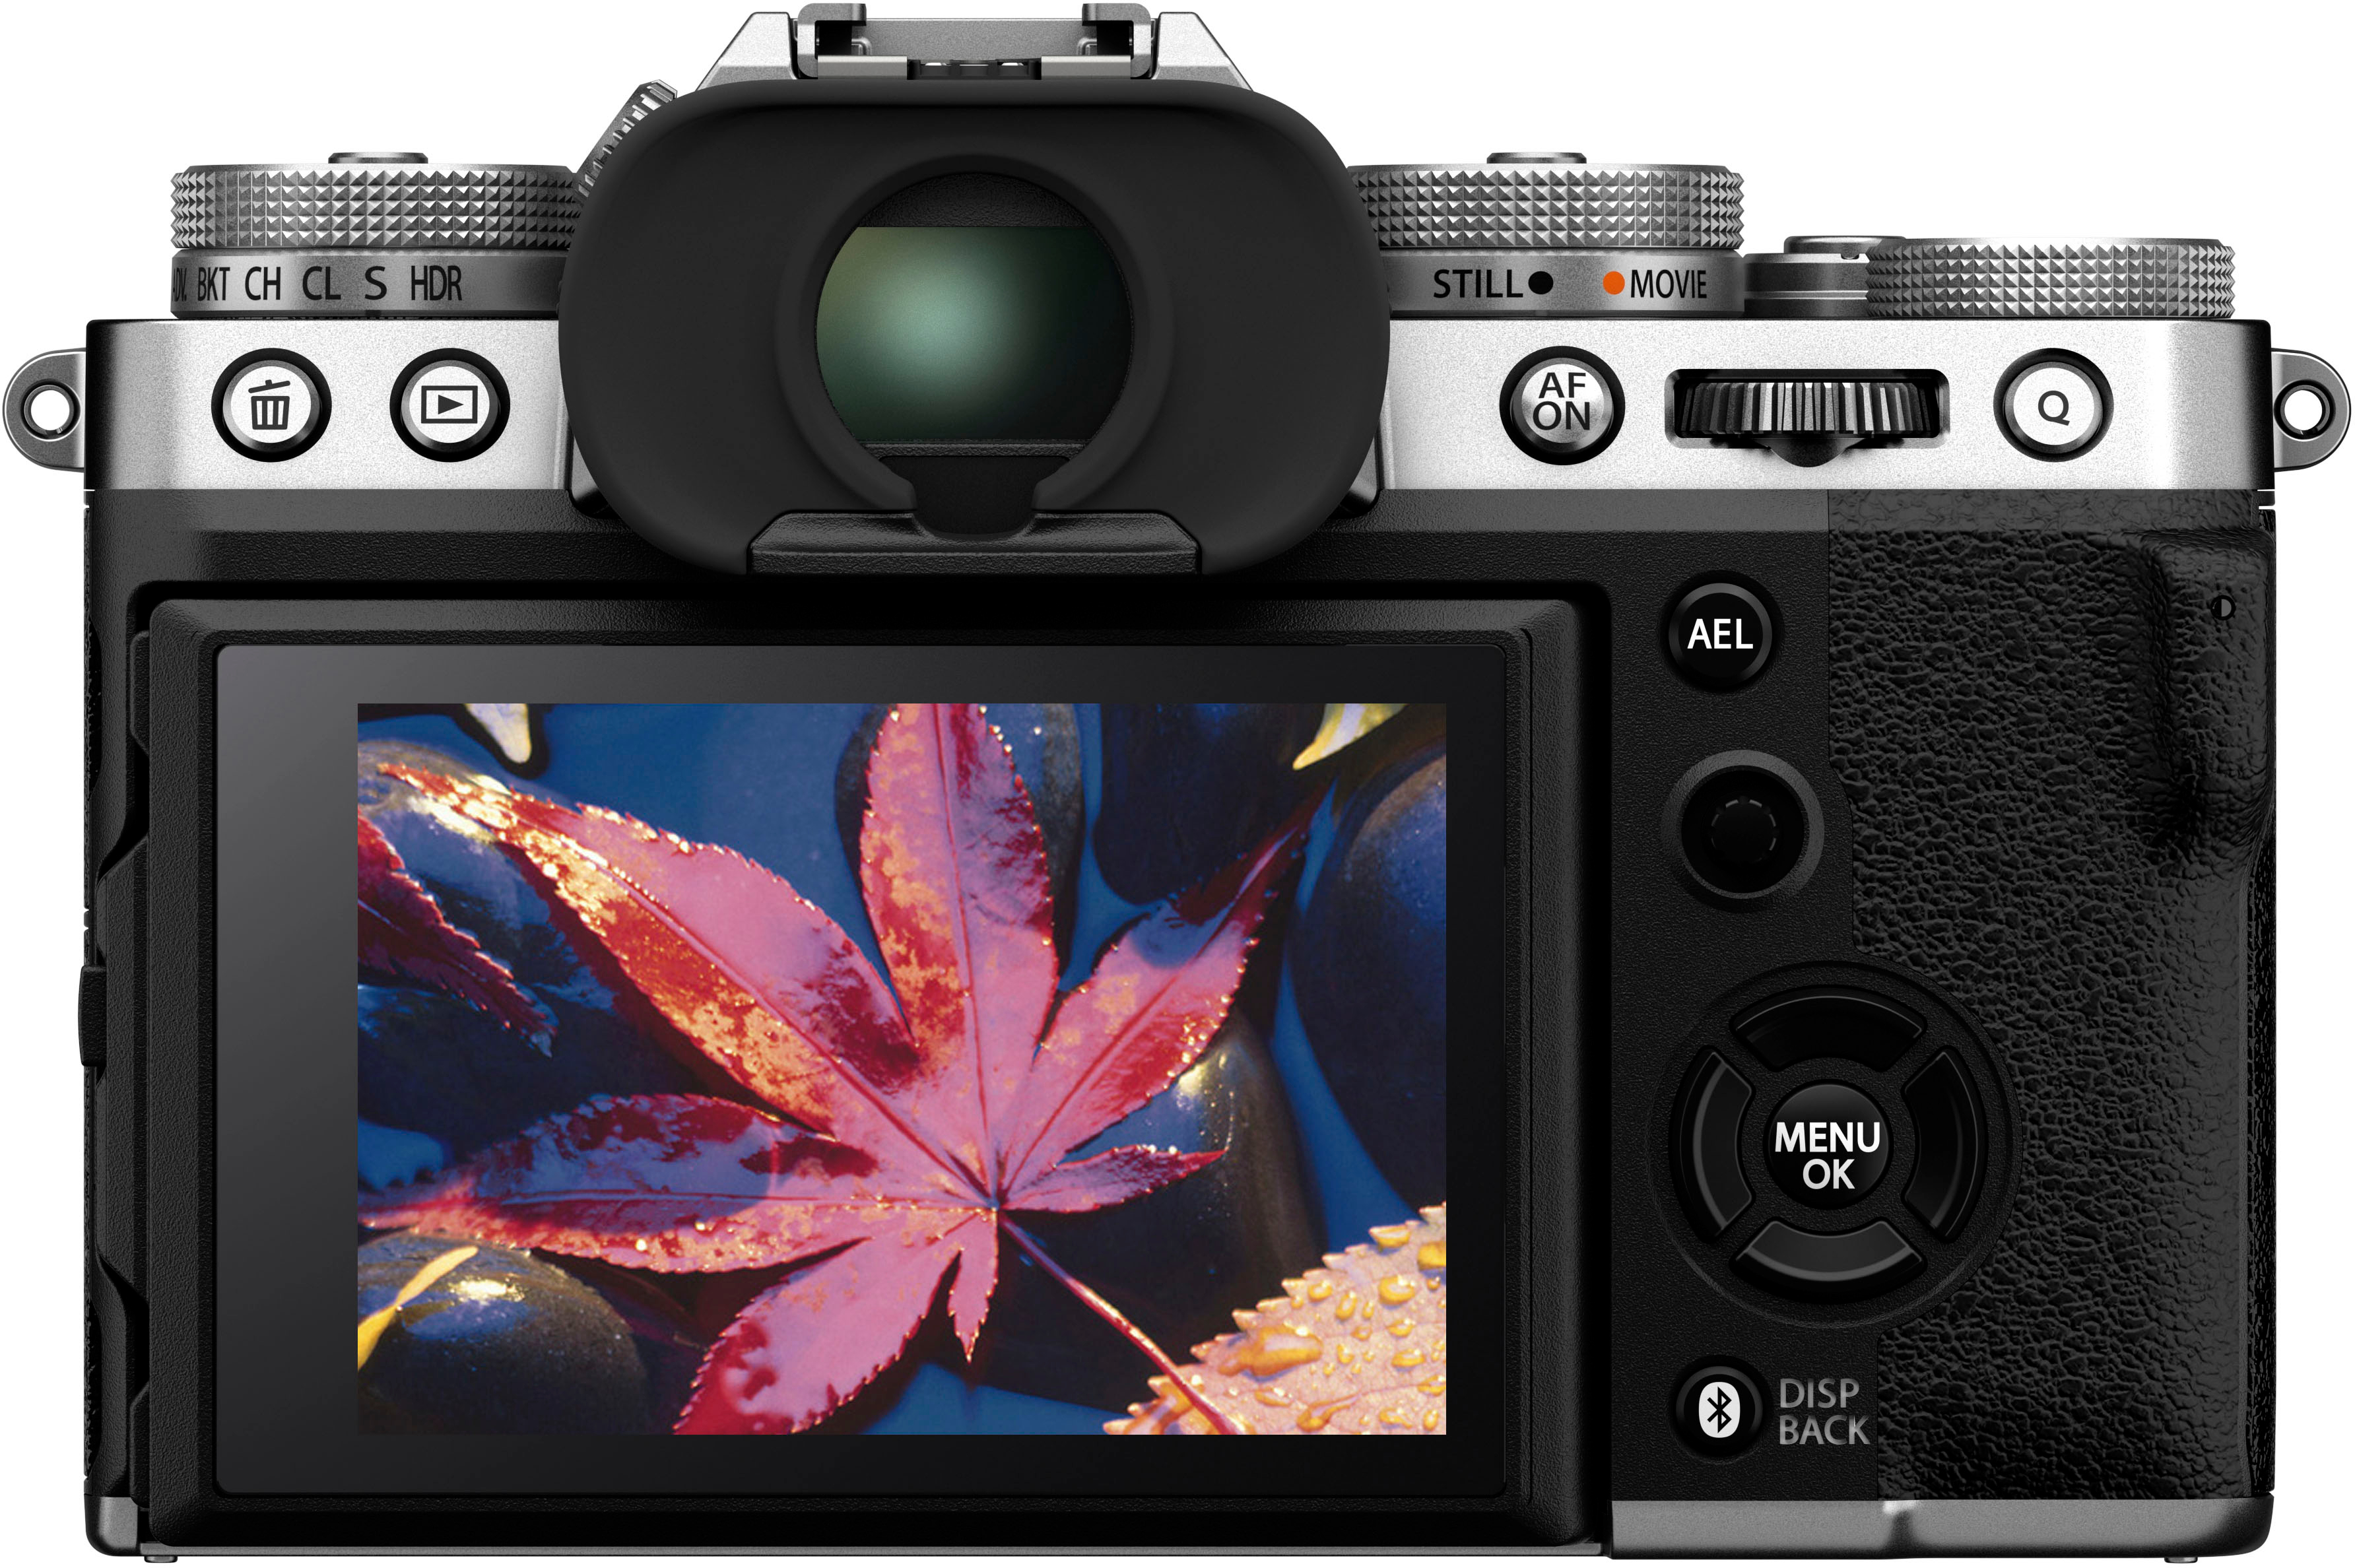 Fujifilm X-T5 Mirrorless Digital Camera Body